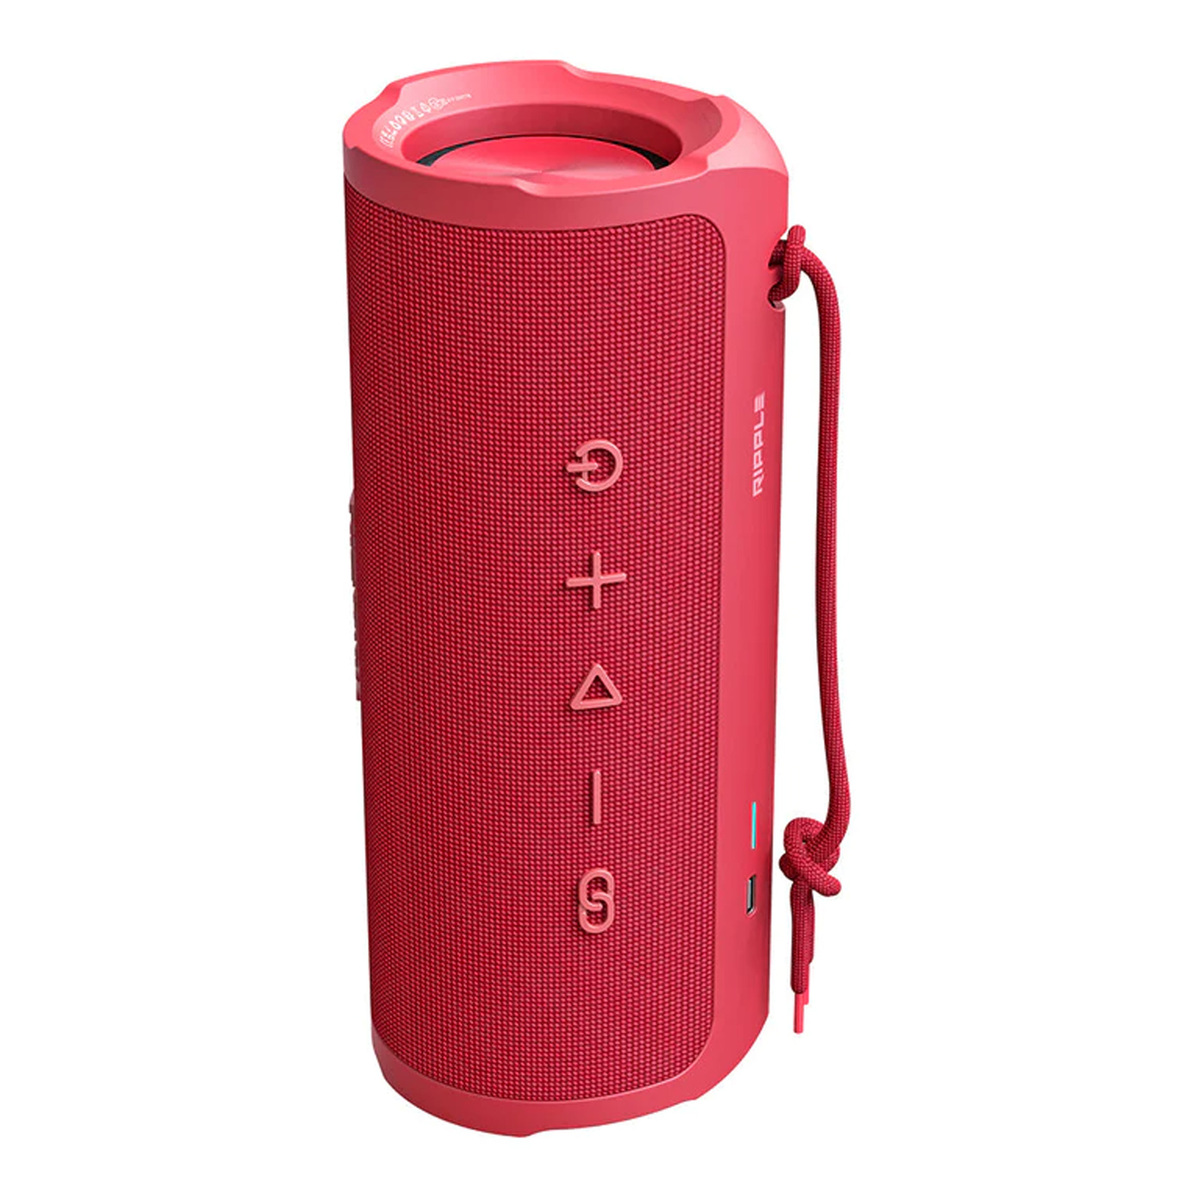 Hifuture IPX7 Portable Wireless Speaker, Red, Ripple